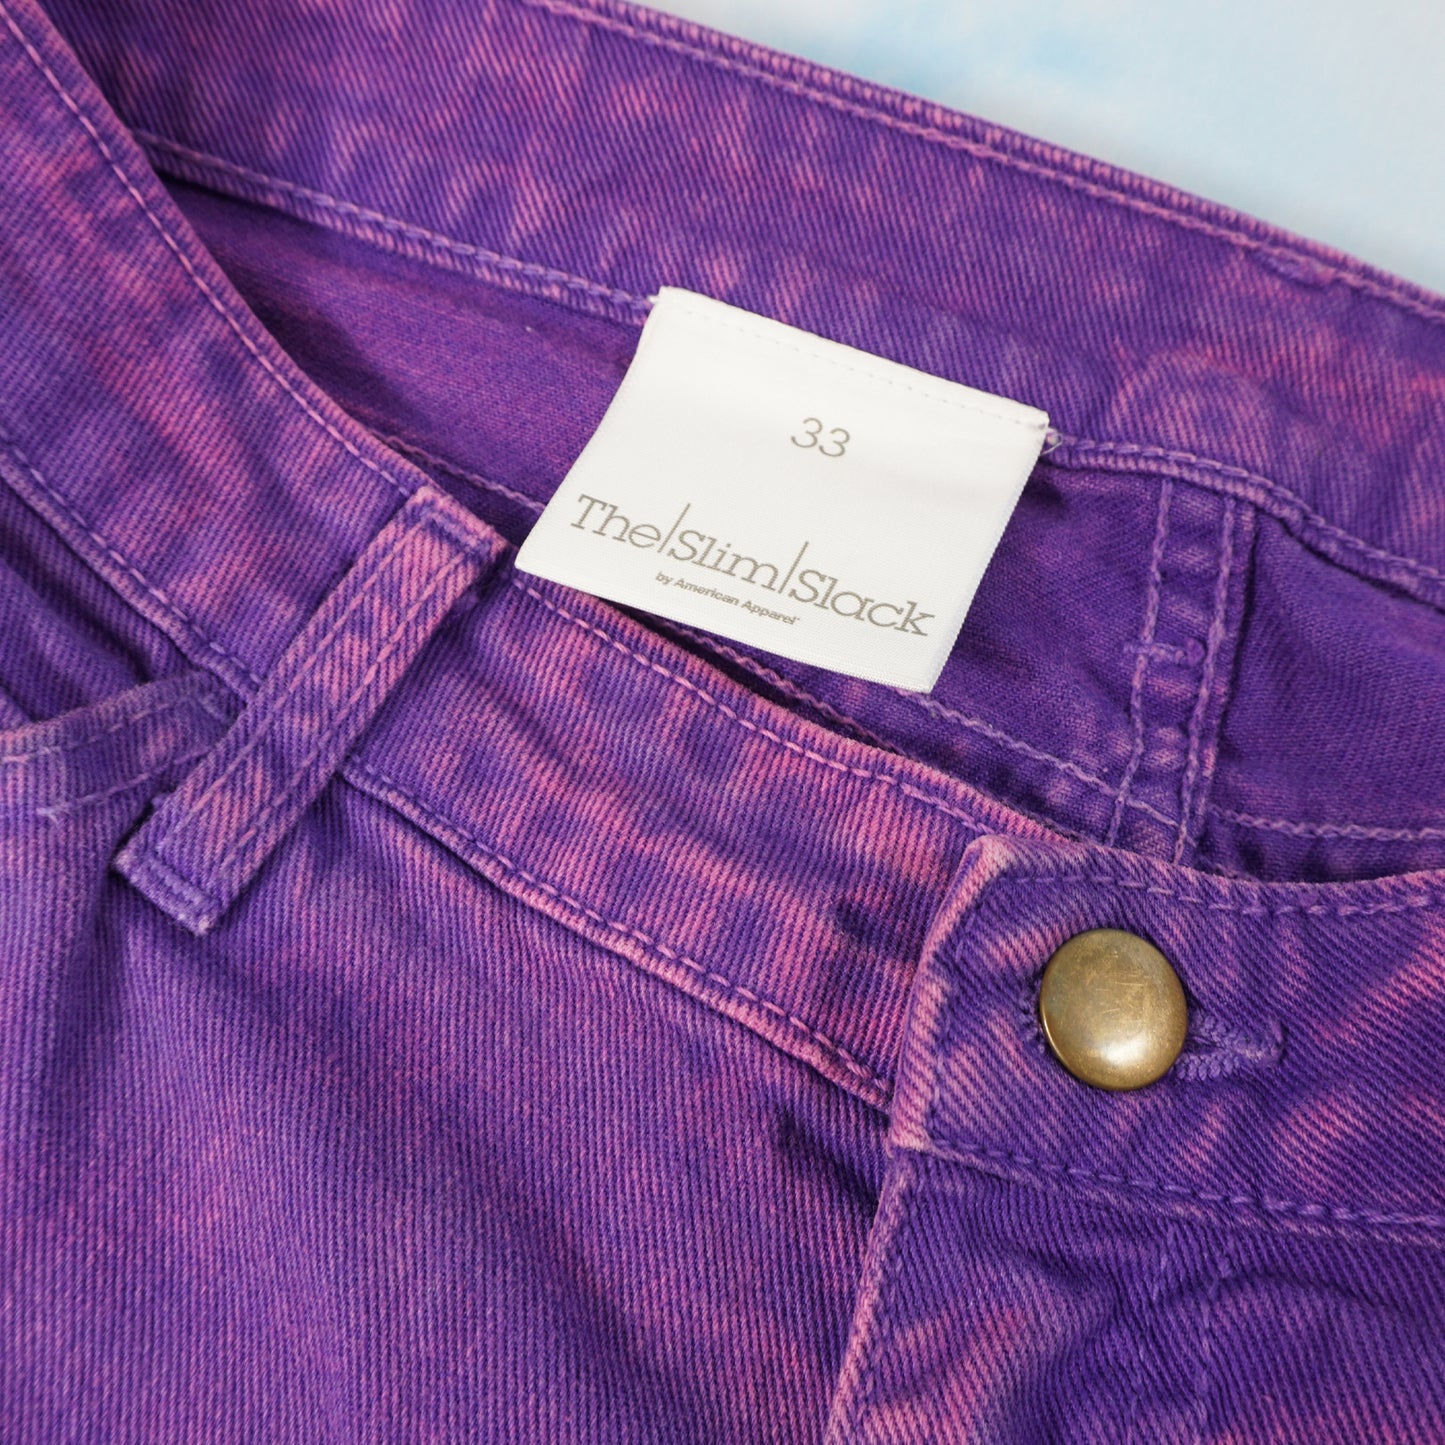 American Apparel Purple Jeans